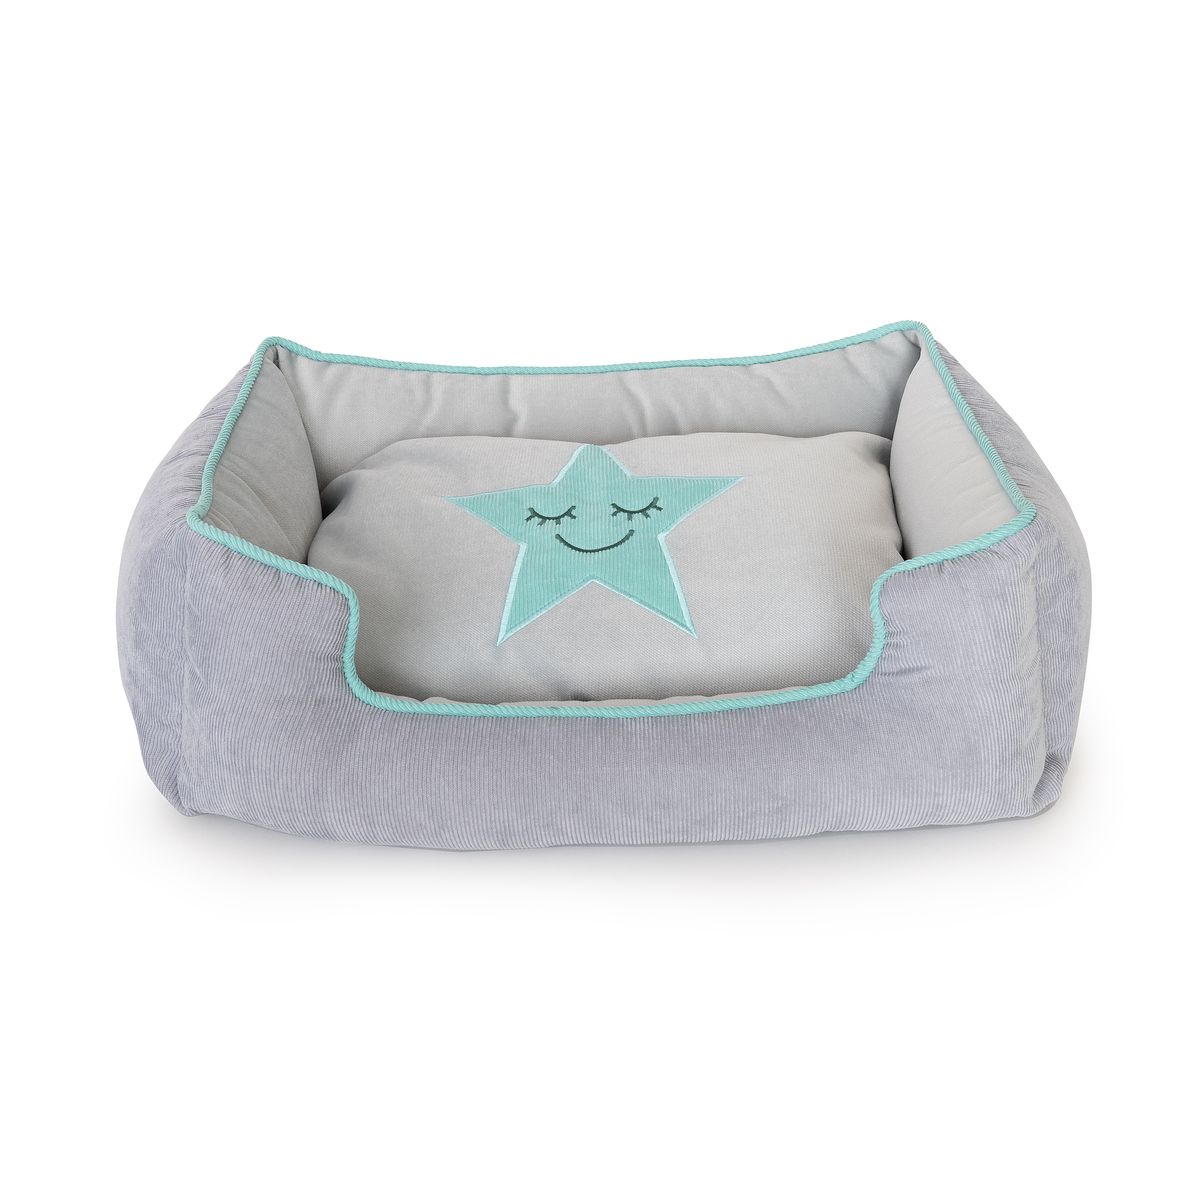 Star dog bed gray